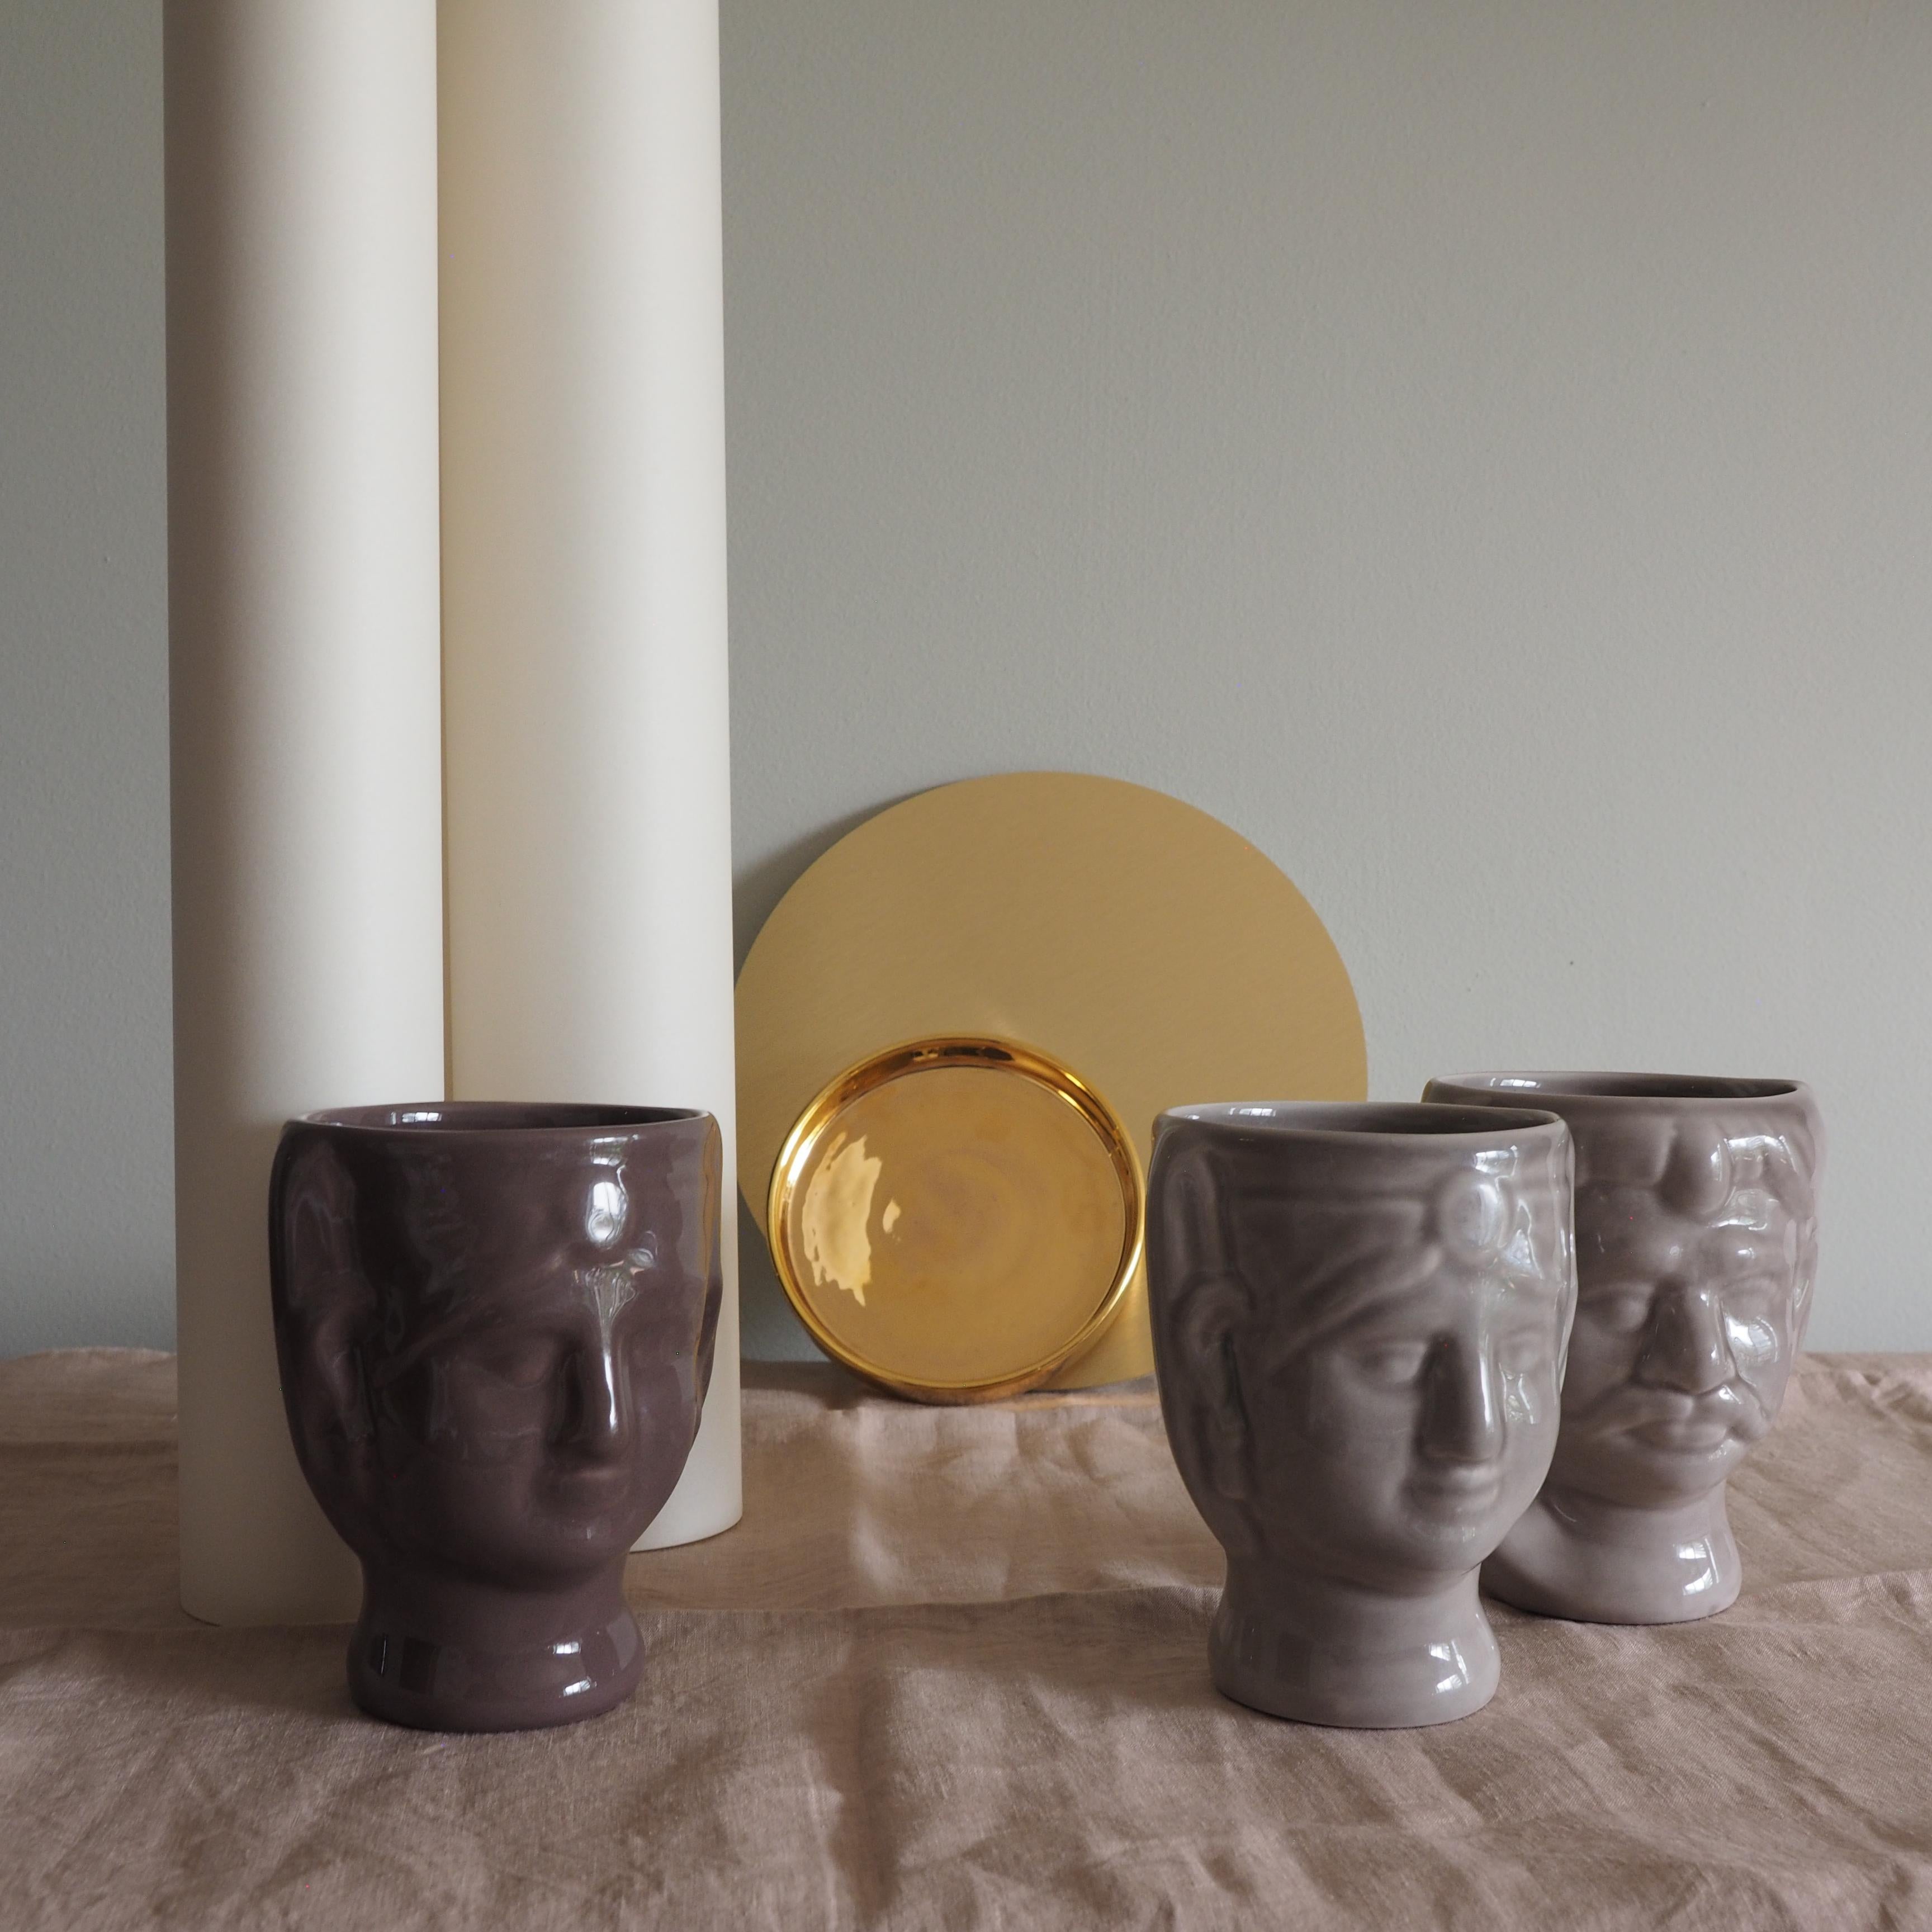 Italian 21st Century, Sicilian Moor' Head Design, Ceramic Vases, Made in Italy Handmade For Sale